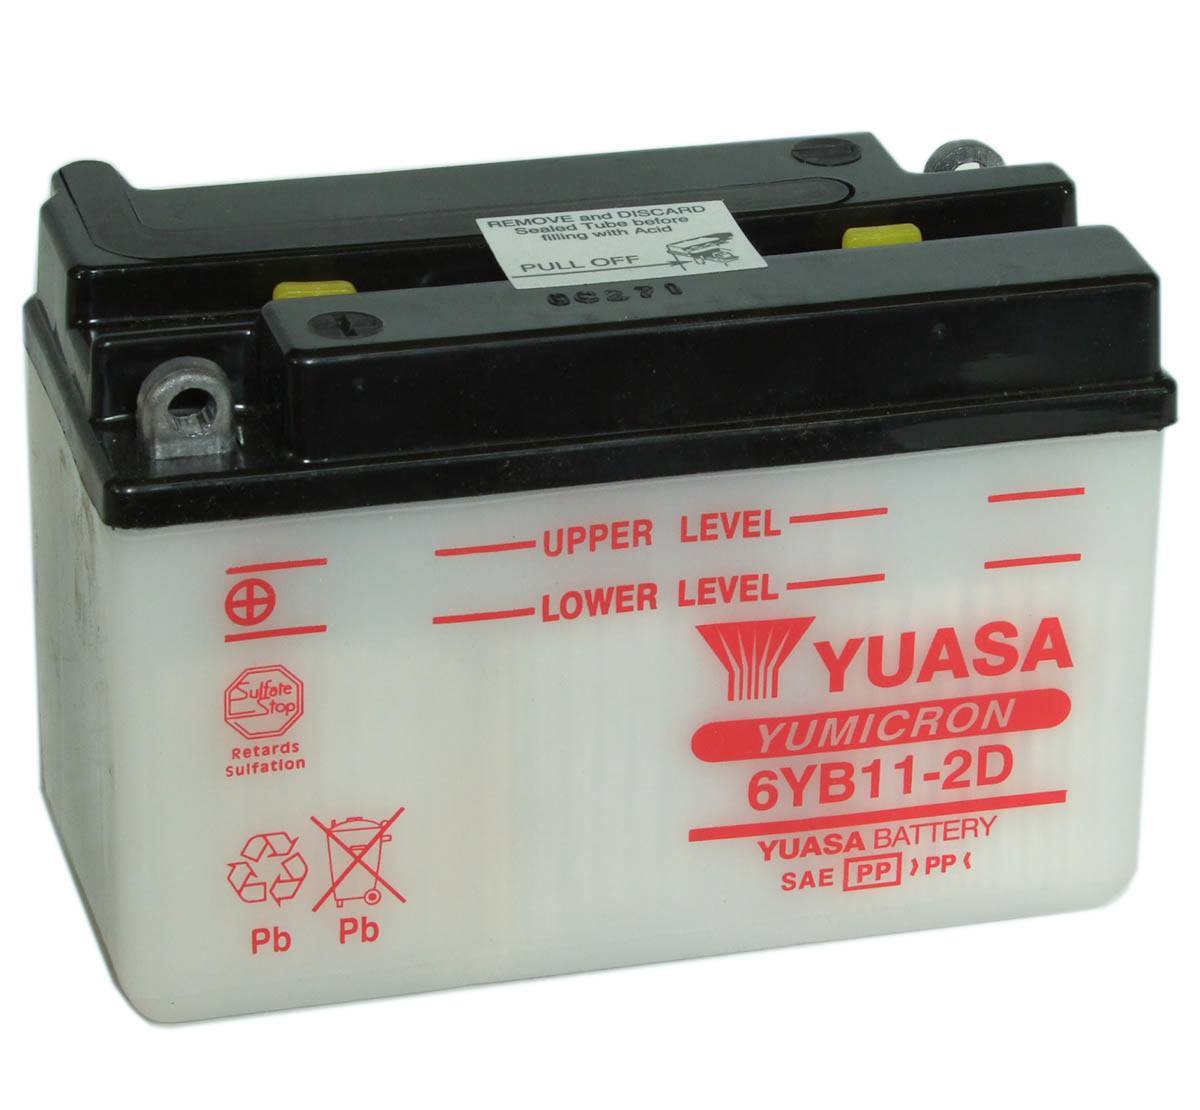 Yuasa 6YB11-2D Motorcycle Battery